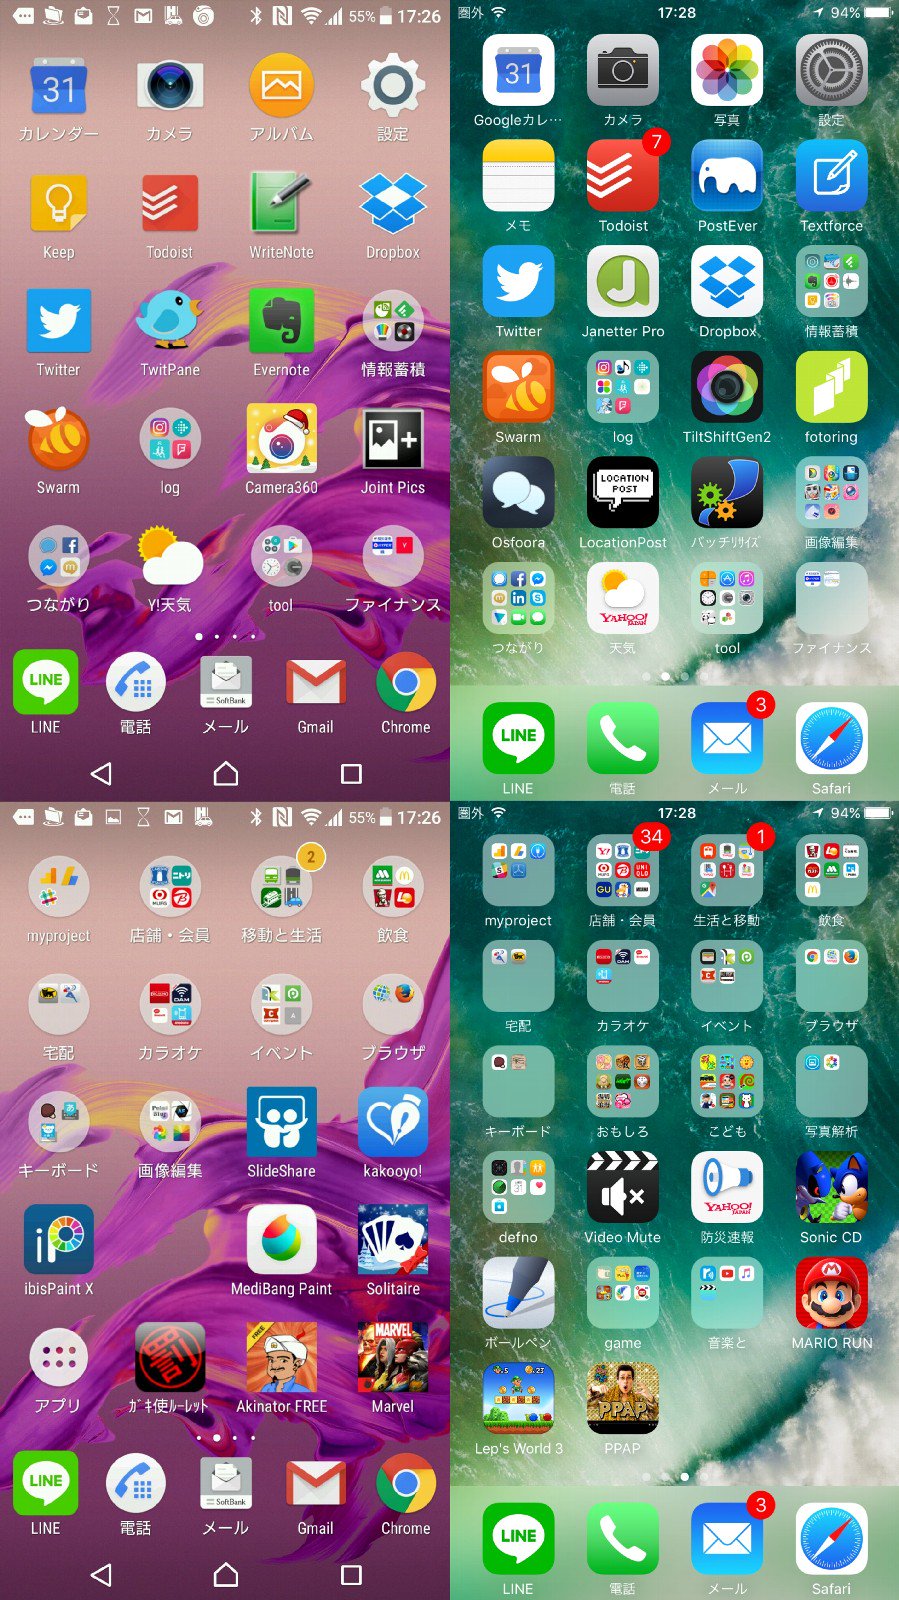 Nilog 現時点での Android Xperia Xz Iphone 6 のホーム画面 1ページ目と2ページ目 16 12 31